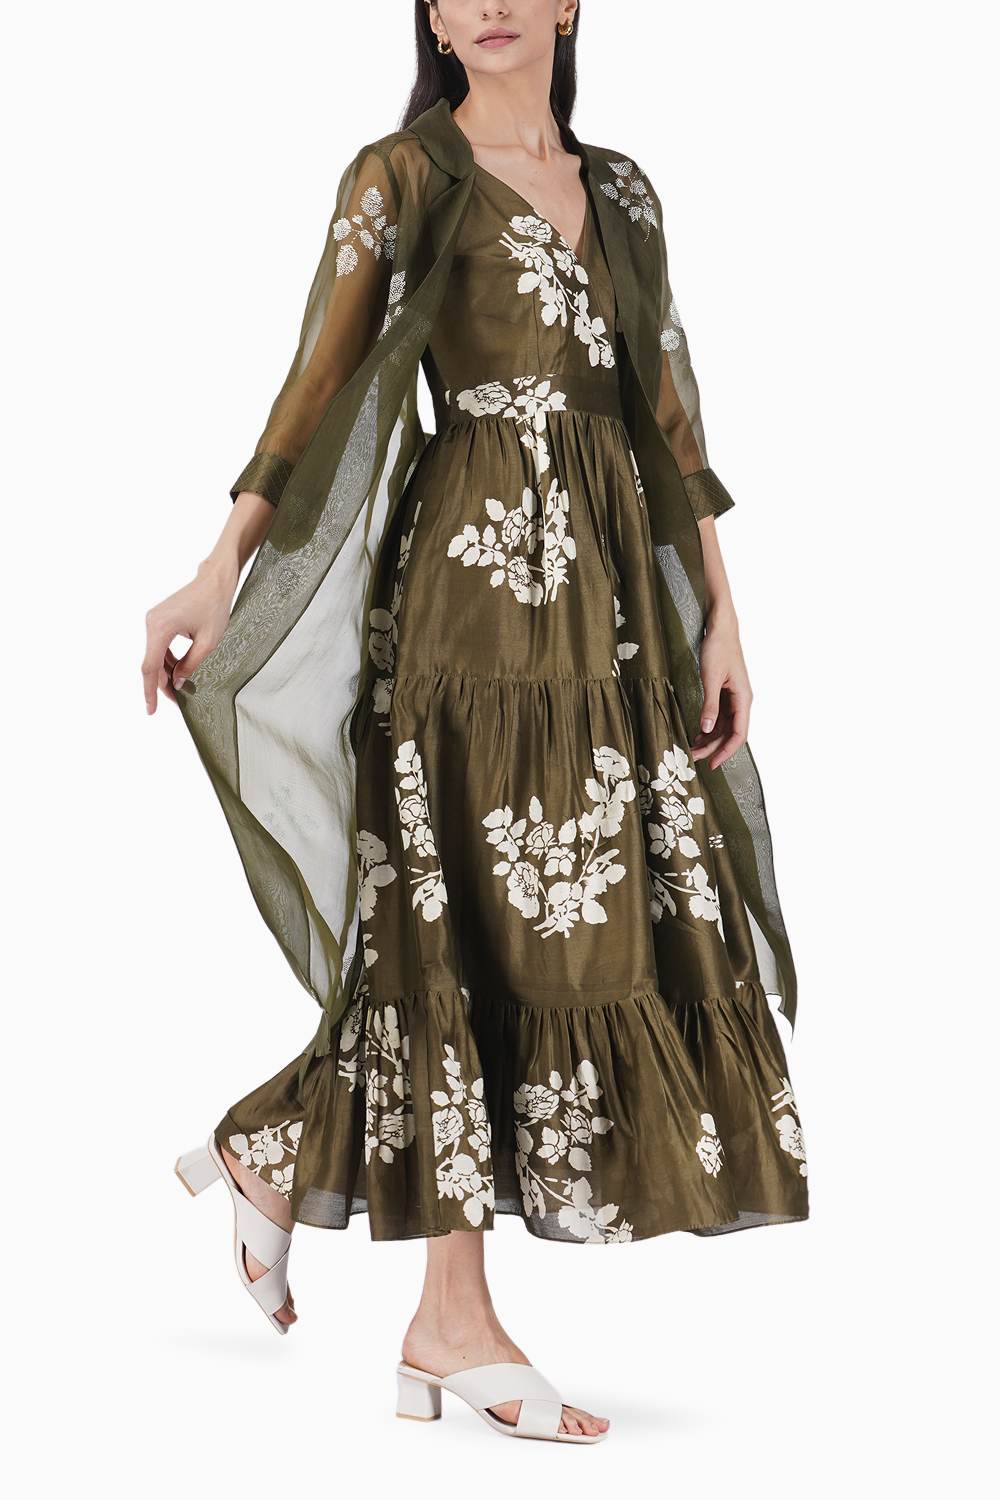 Ivy Petal Printed Olive Dress with Organza Jacket